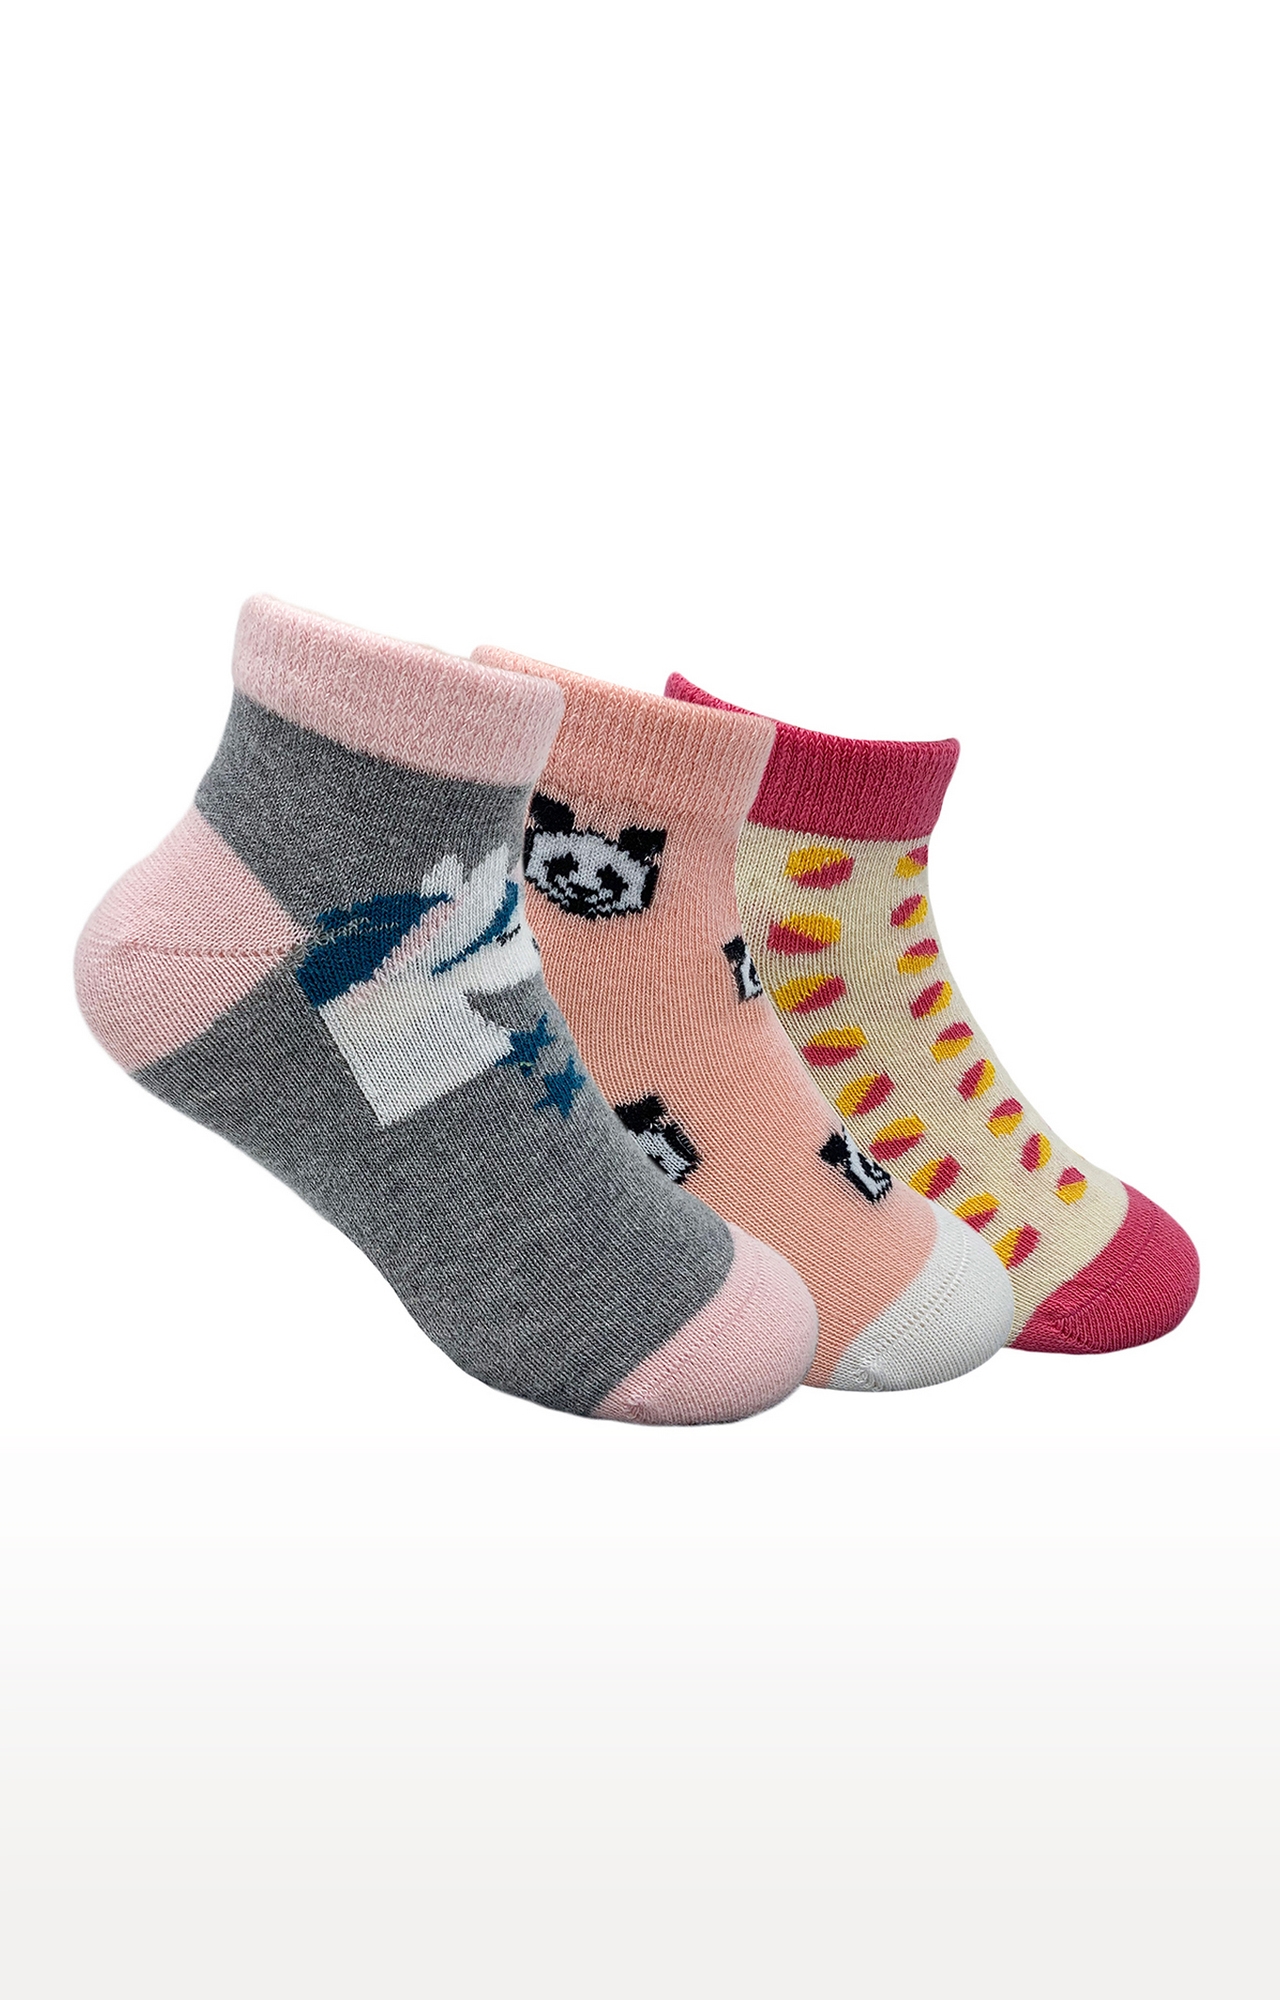 Mint & Oak Pretty In Pink Cotton Multi Ankle Length Socks for Kids - Pack of 3